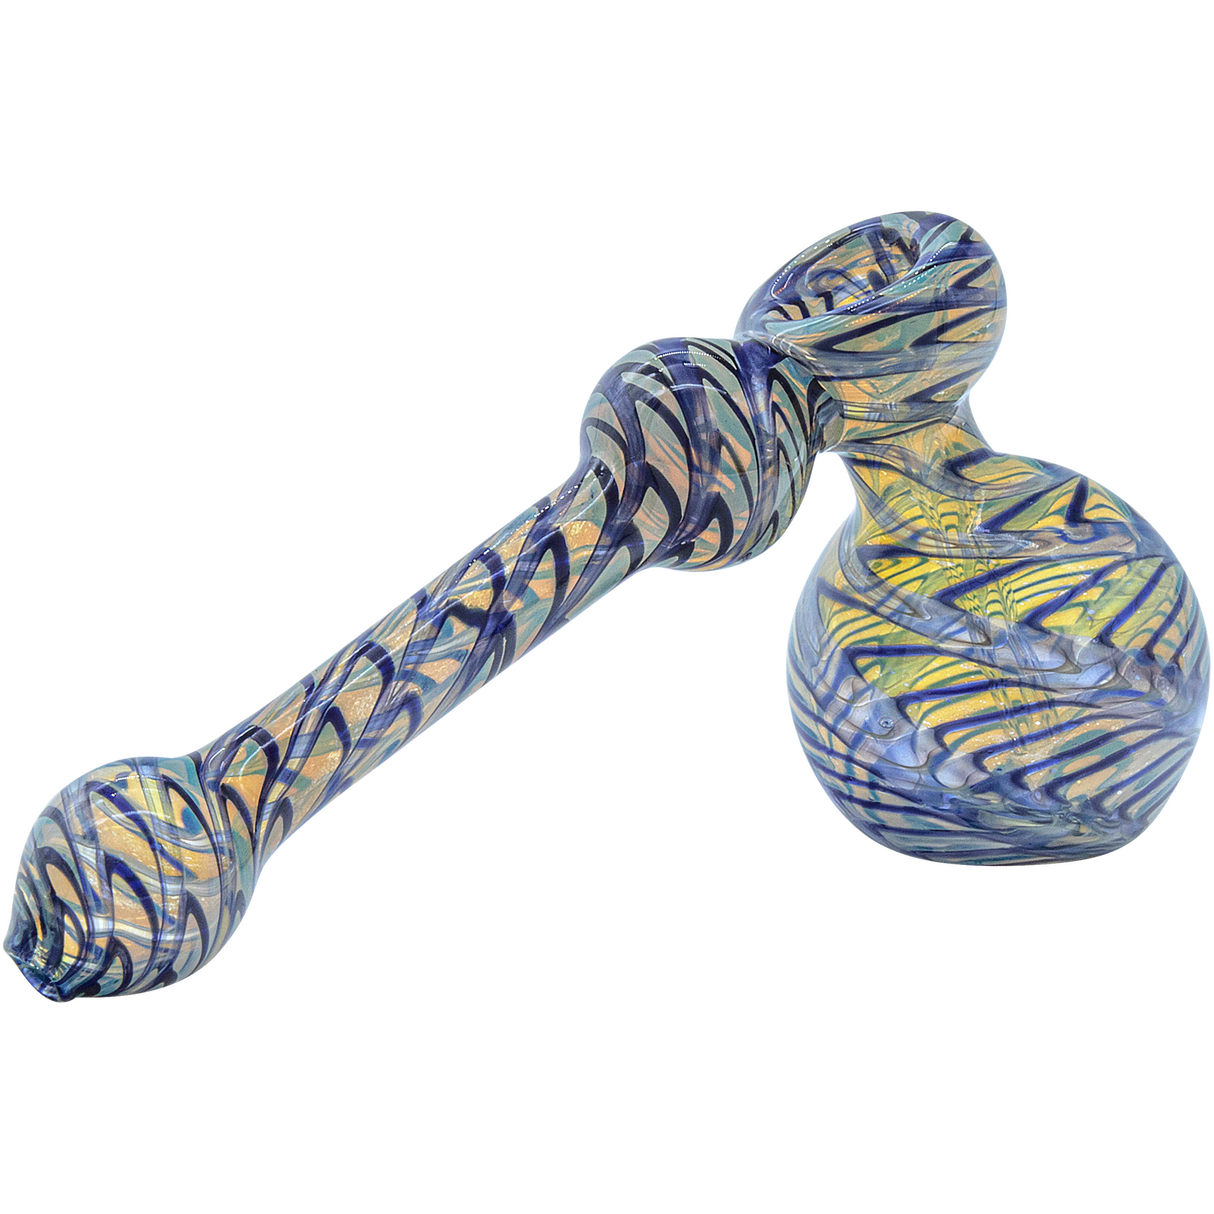 LA Pipes "Full Rake" Fumed Hammer Bubbler Pipe, 6" Length, Borosilicate Glass, Side View